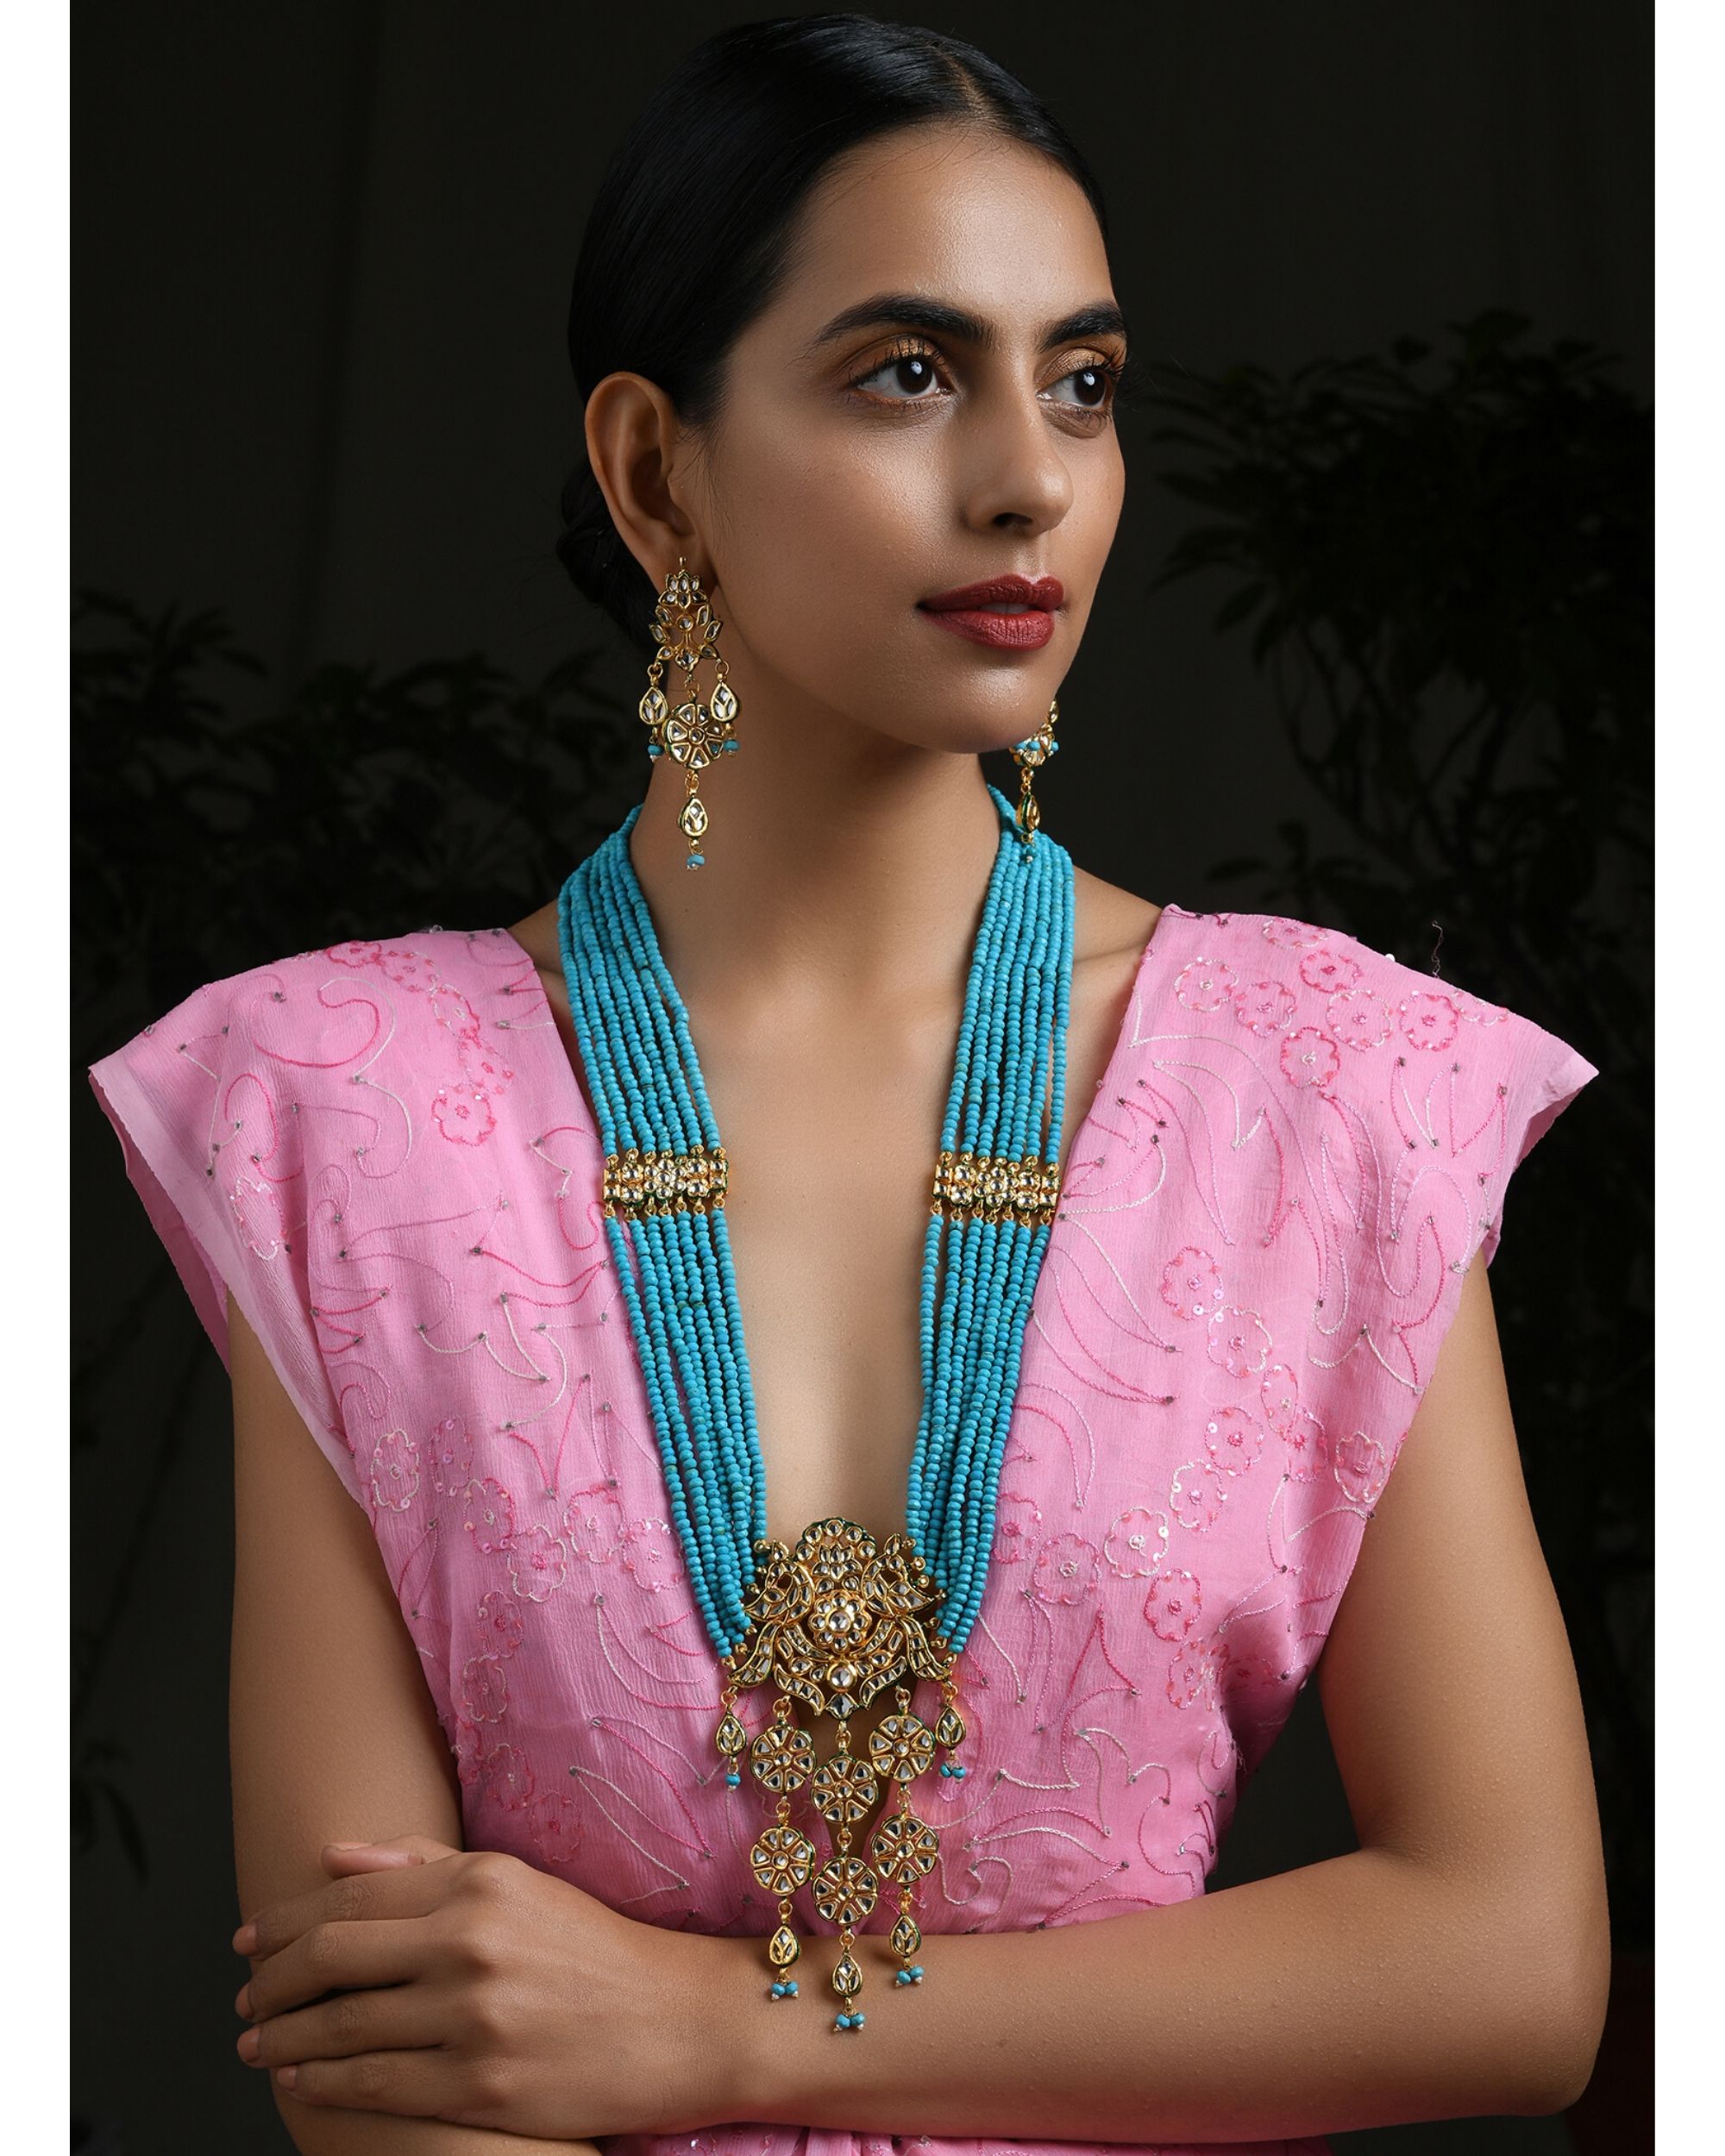 Jasmine turquoise beaded neckpiece with earrings - set of two